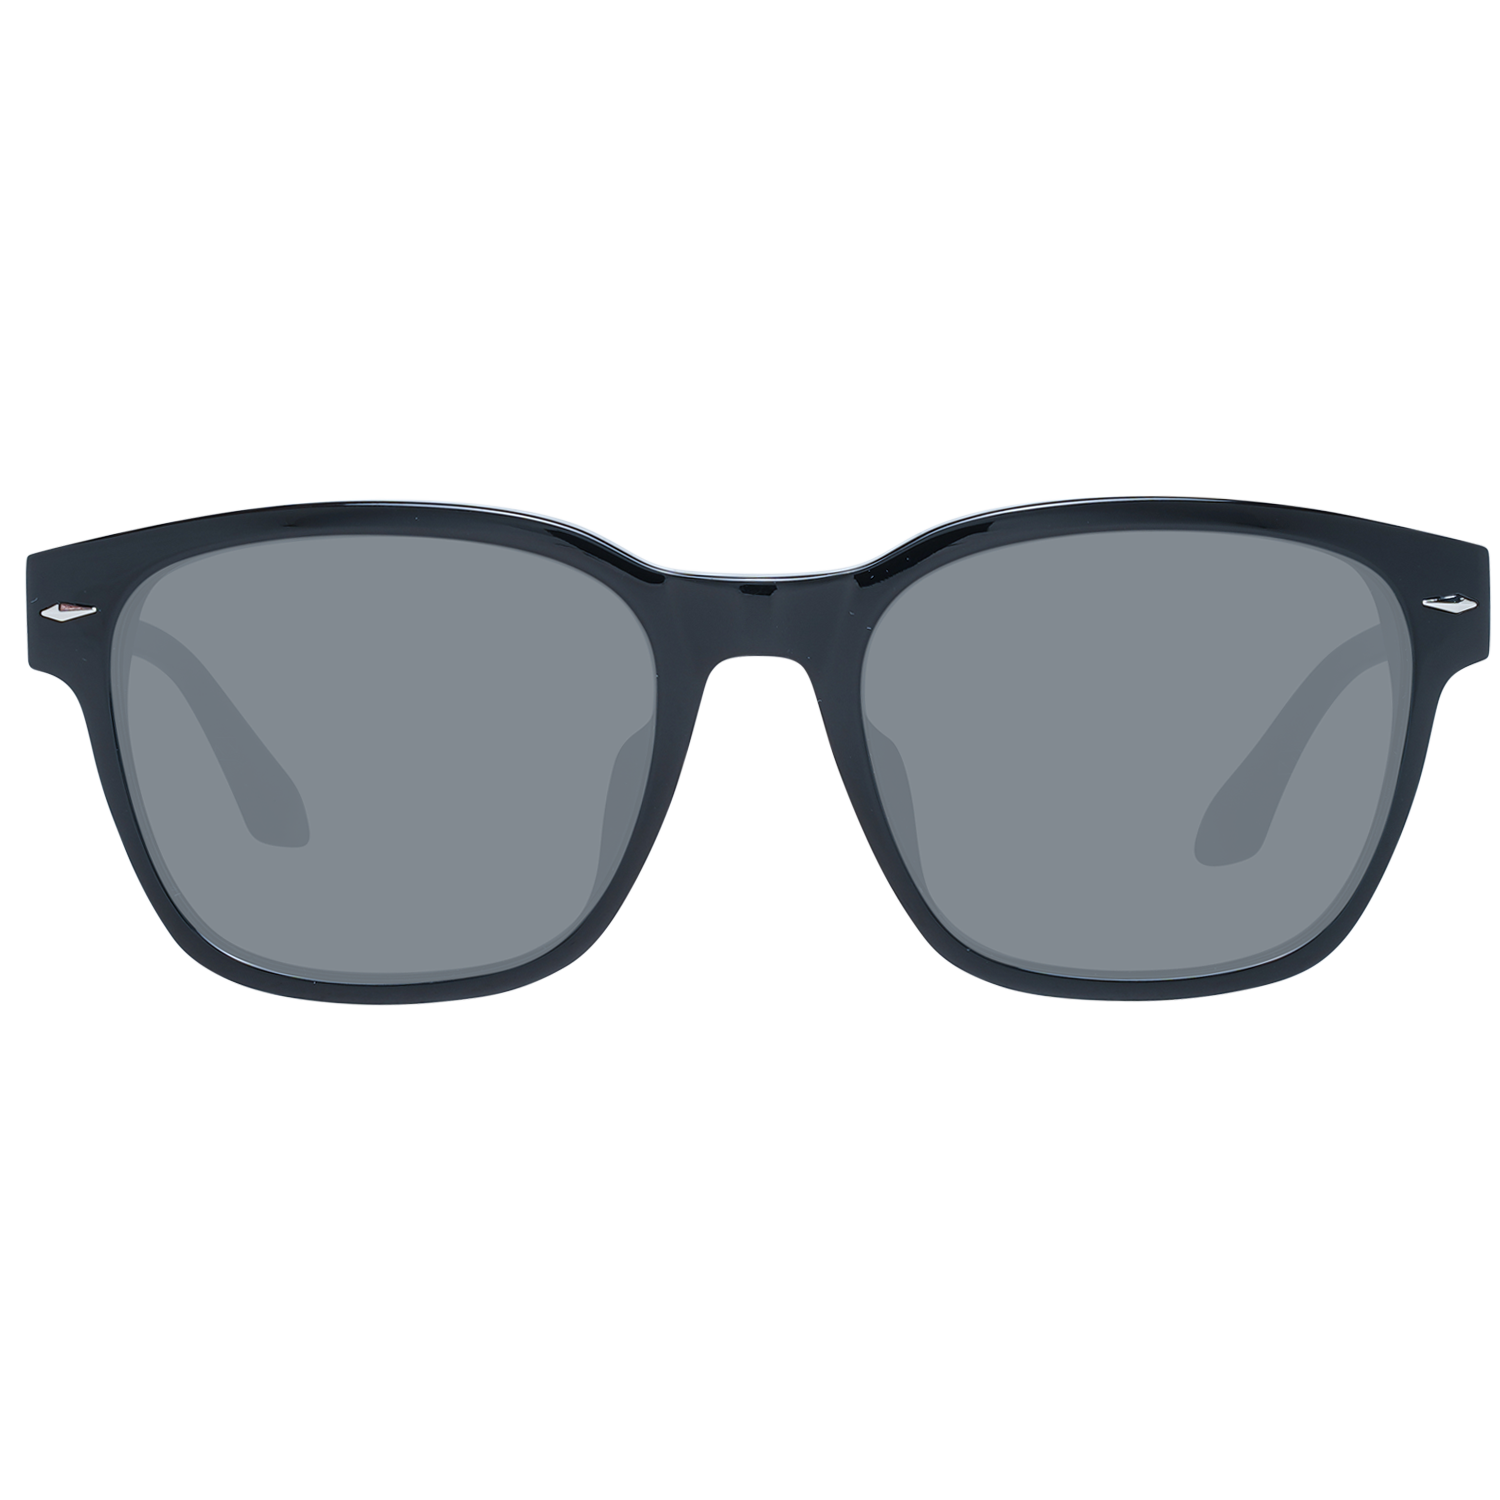 Longines Sunglasses Longines Sunglasses LG0015-H 01A 56mm Eyeglasses Eyewear UK USA Australia 